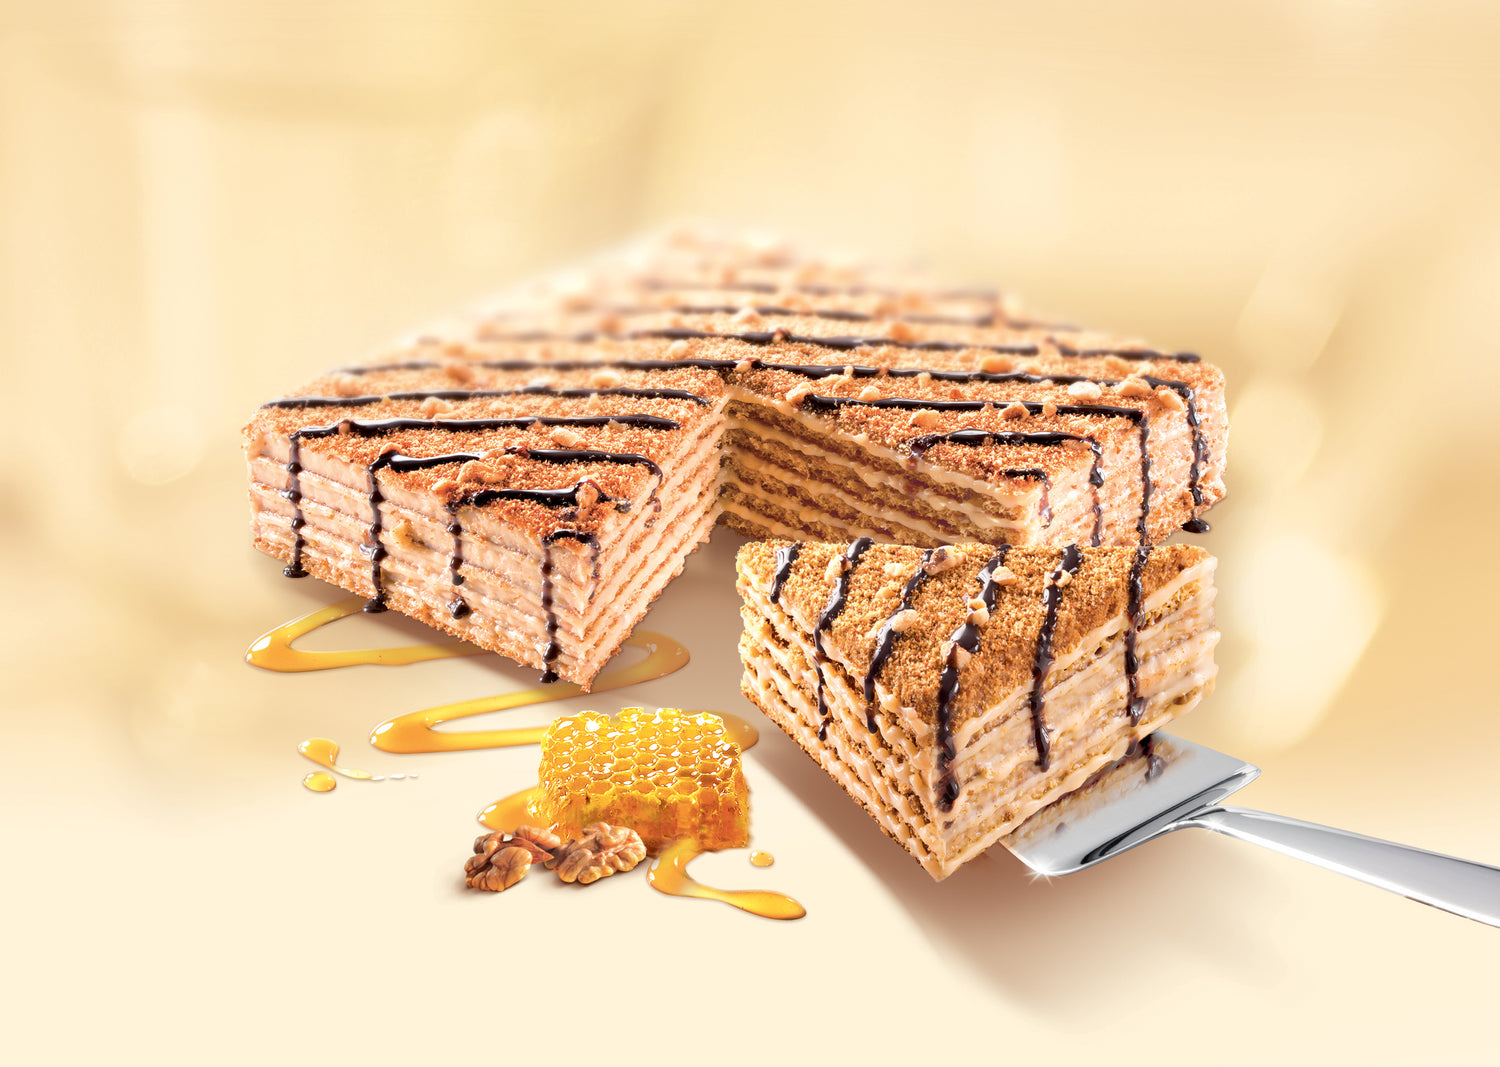 Classic MARLENKA honey cake with walnuts